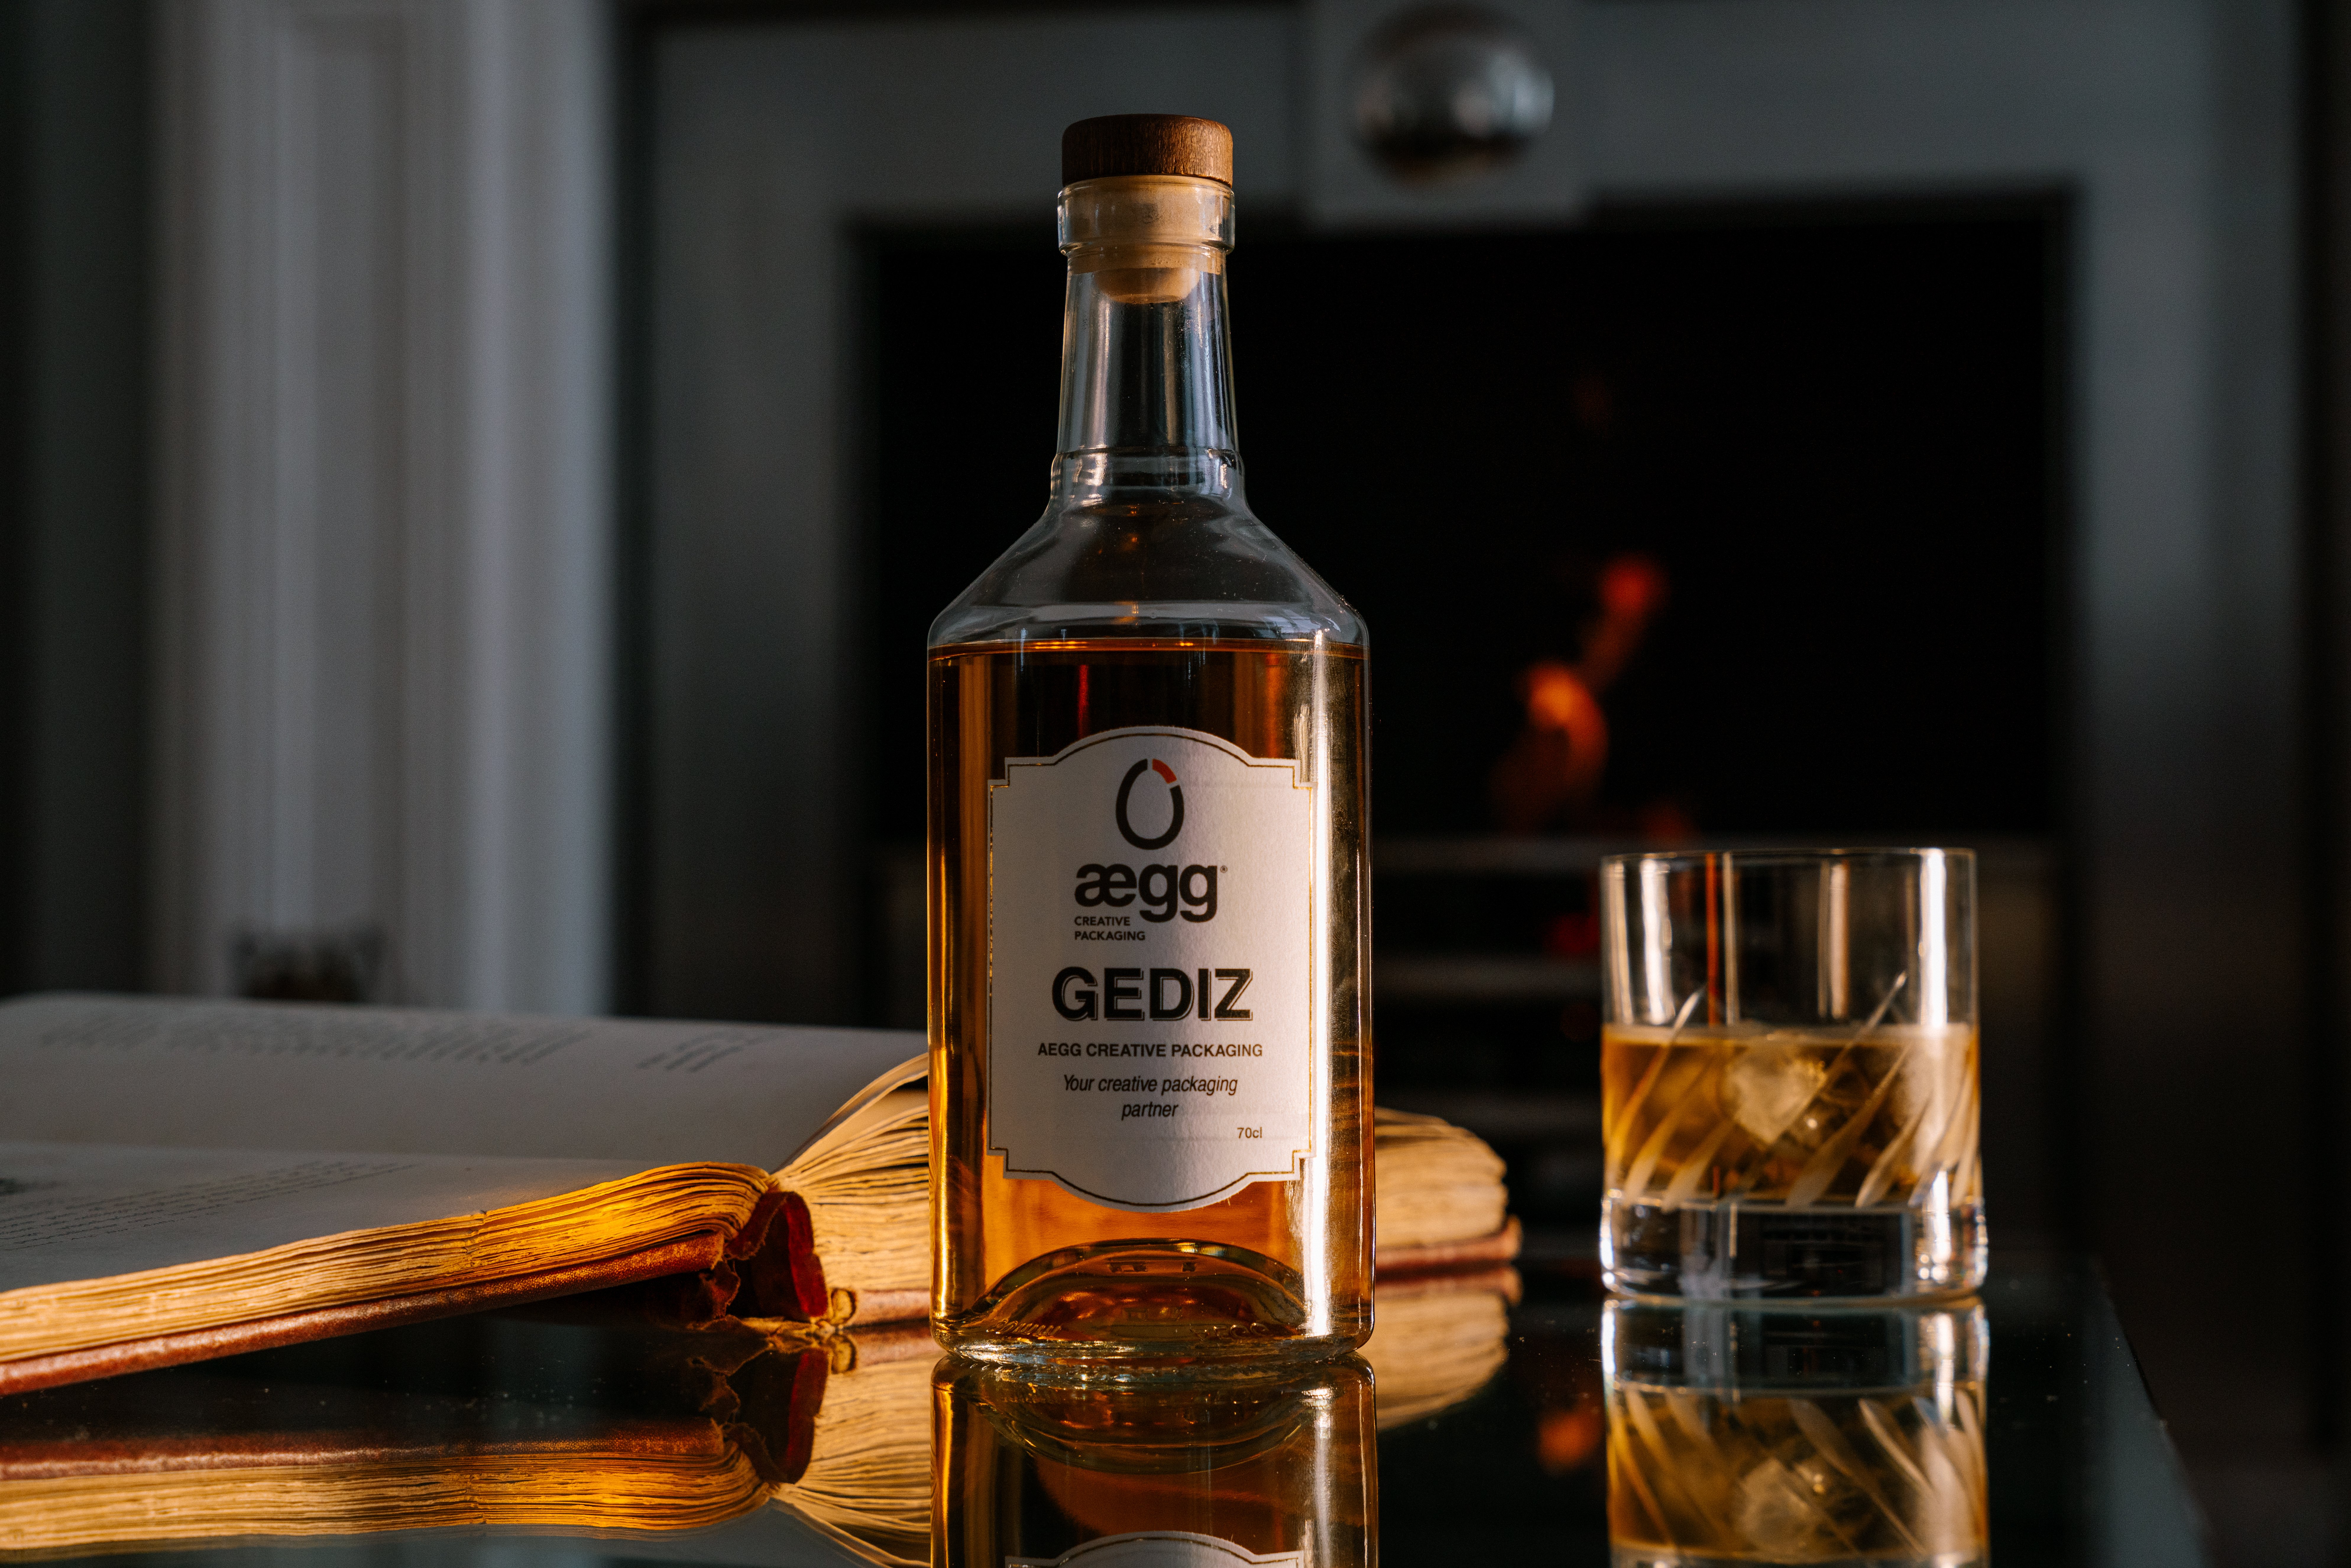 Aegg's Gediz spirit bottle, seen here by a warming fire 